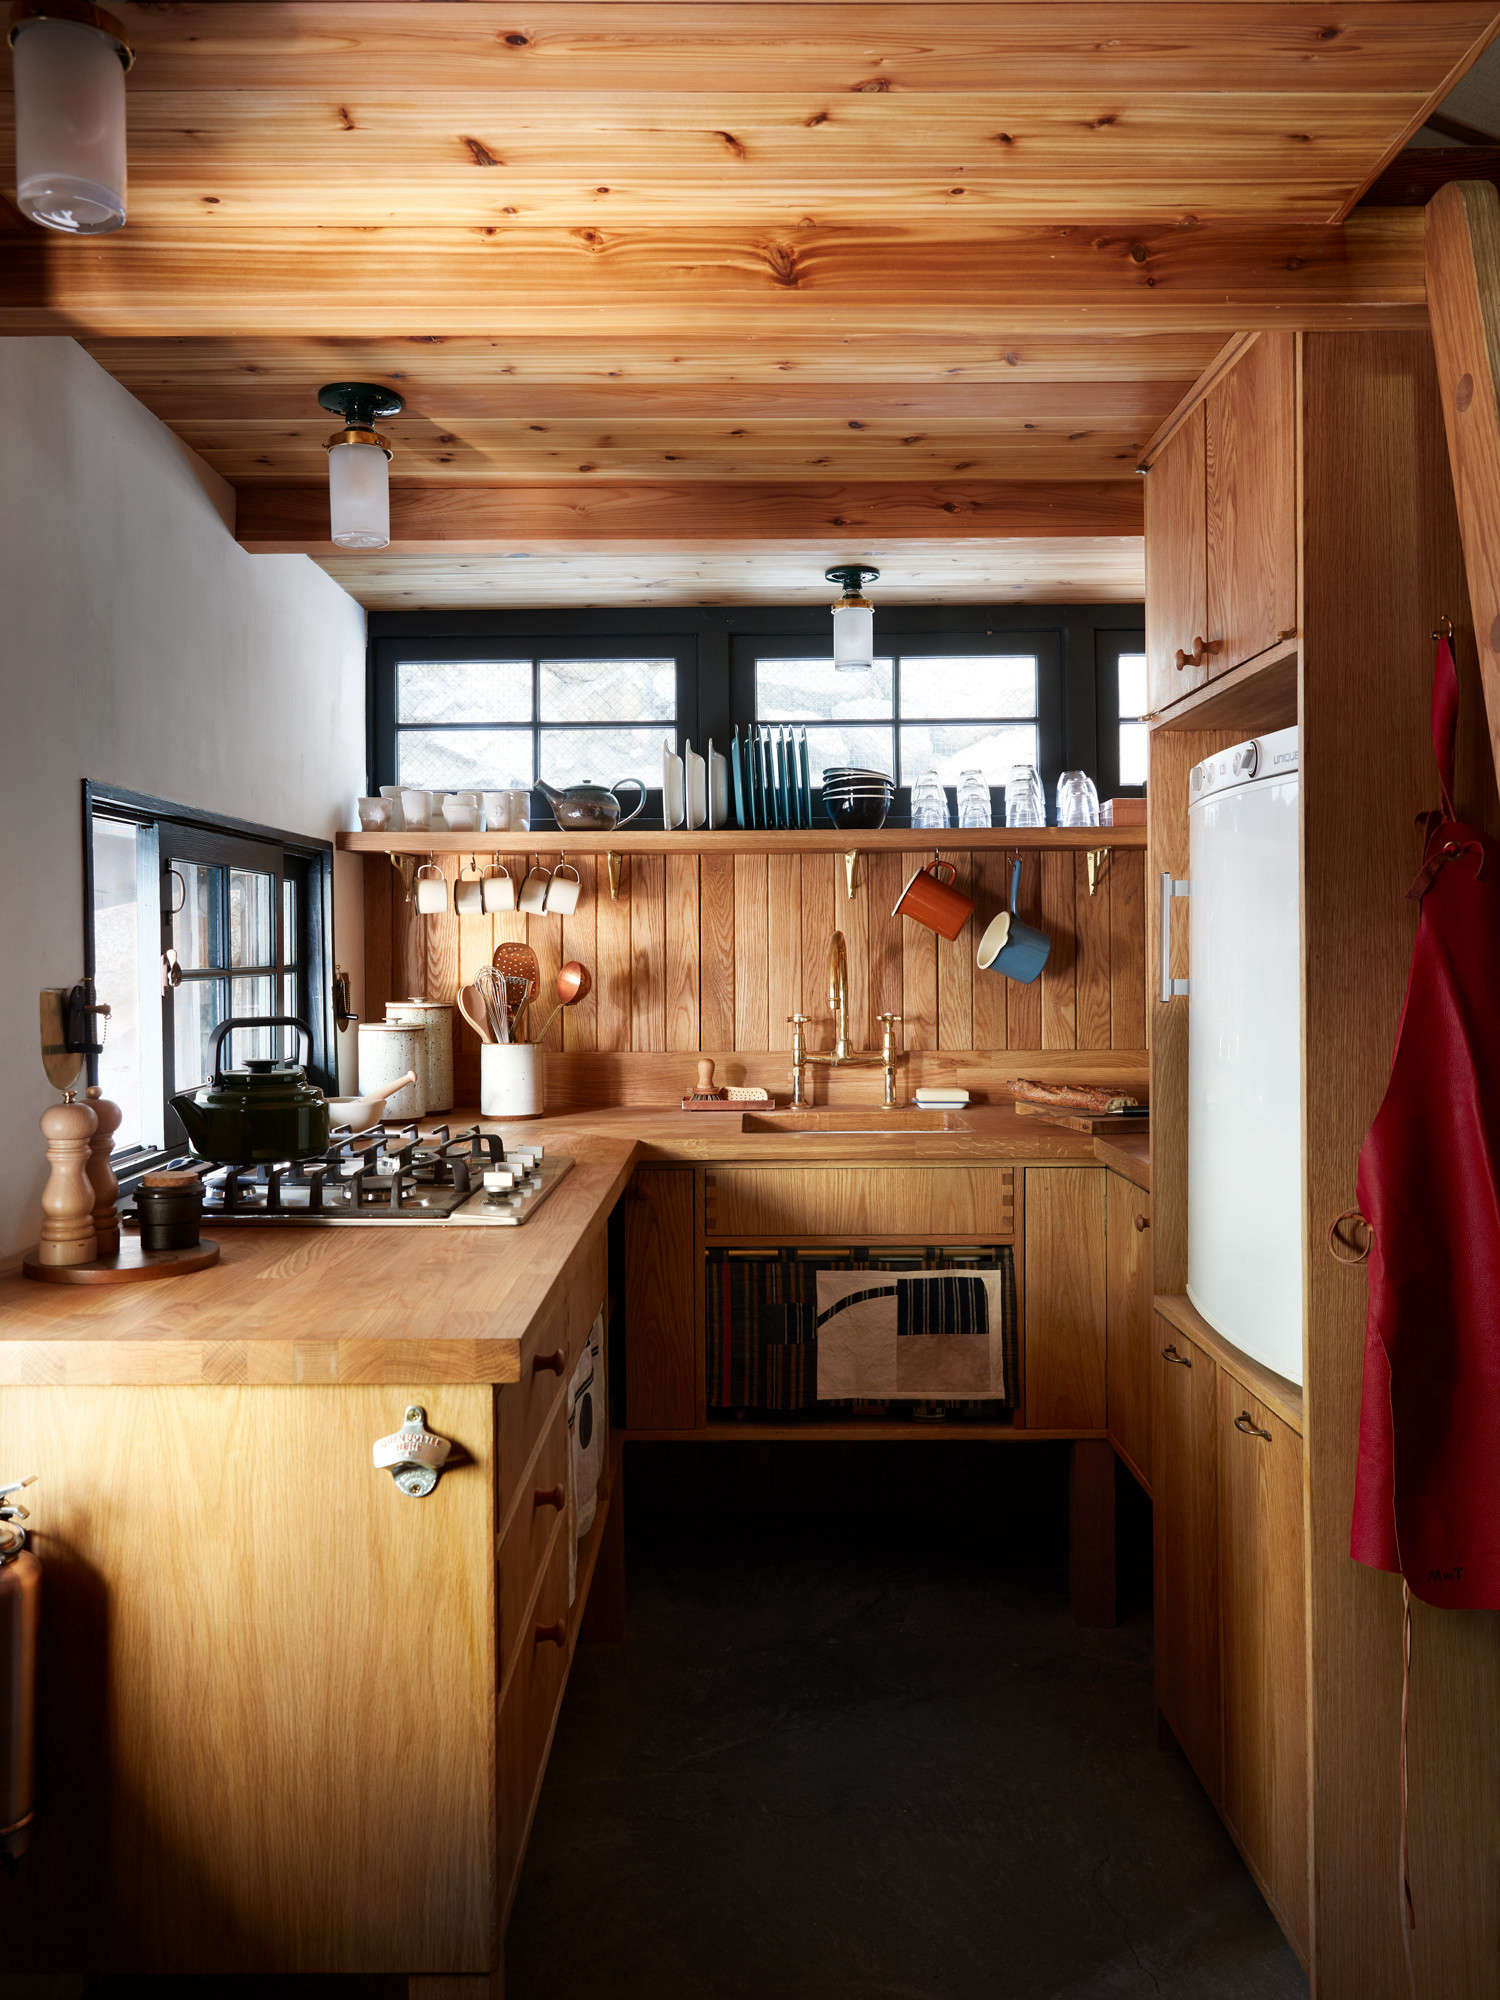 Anthony Russo's Santa Anita Cabin by Commune Design